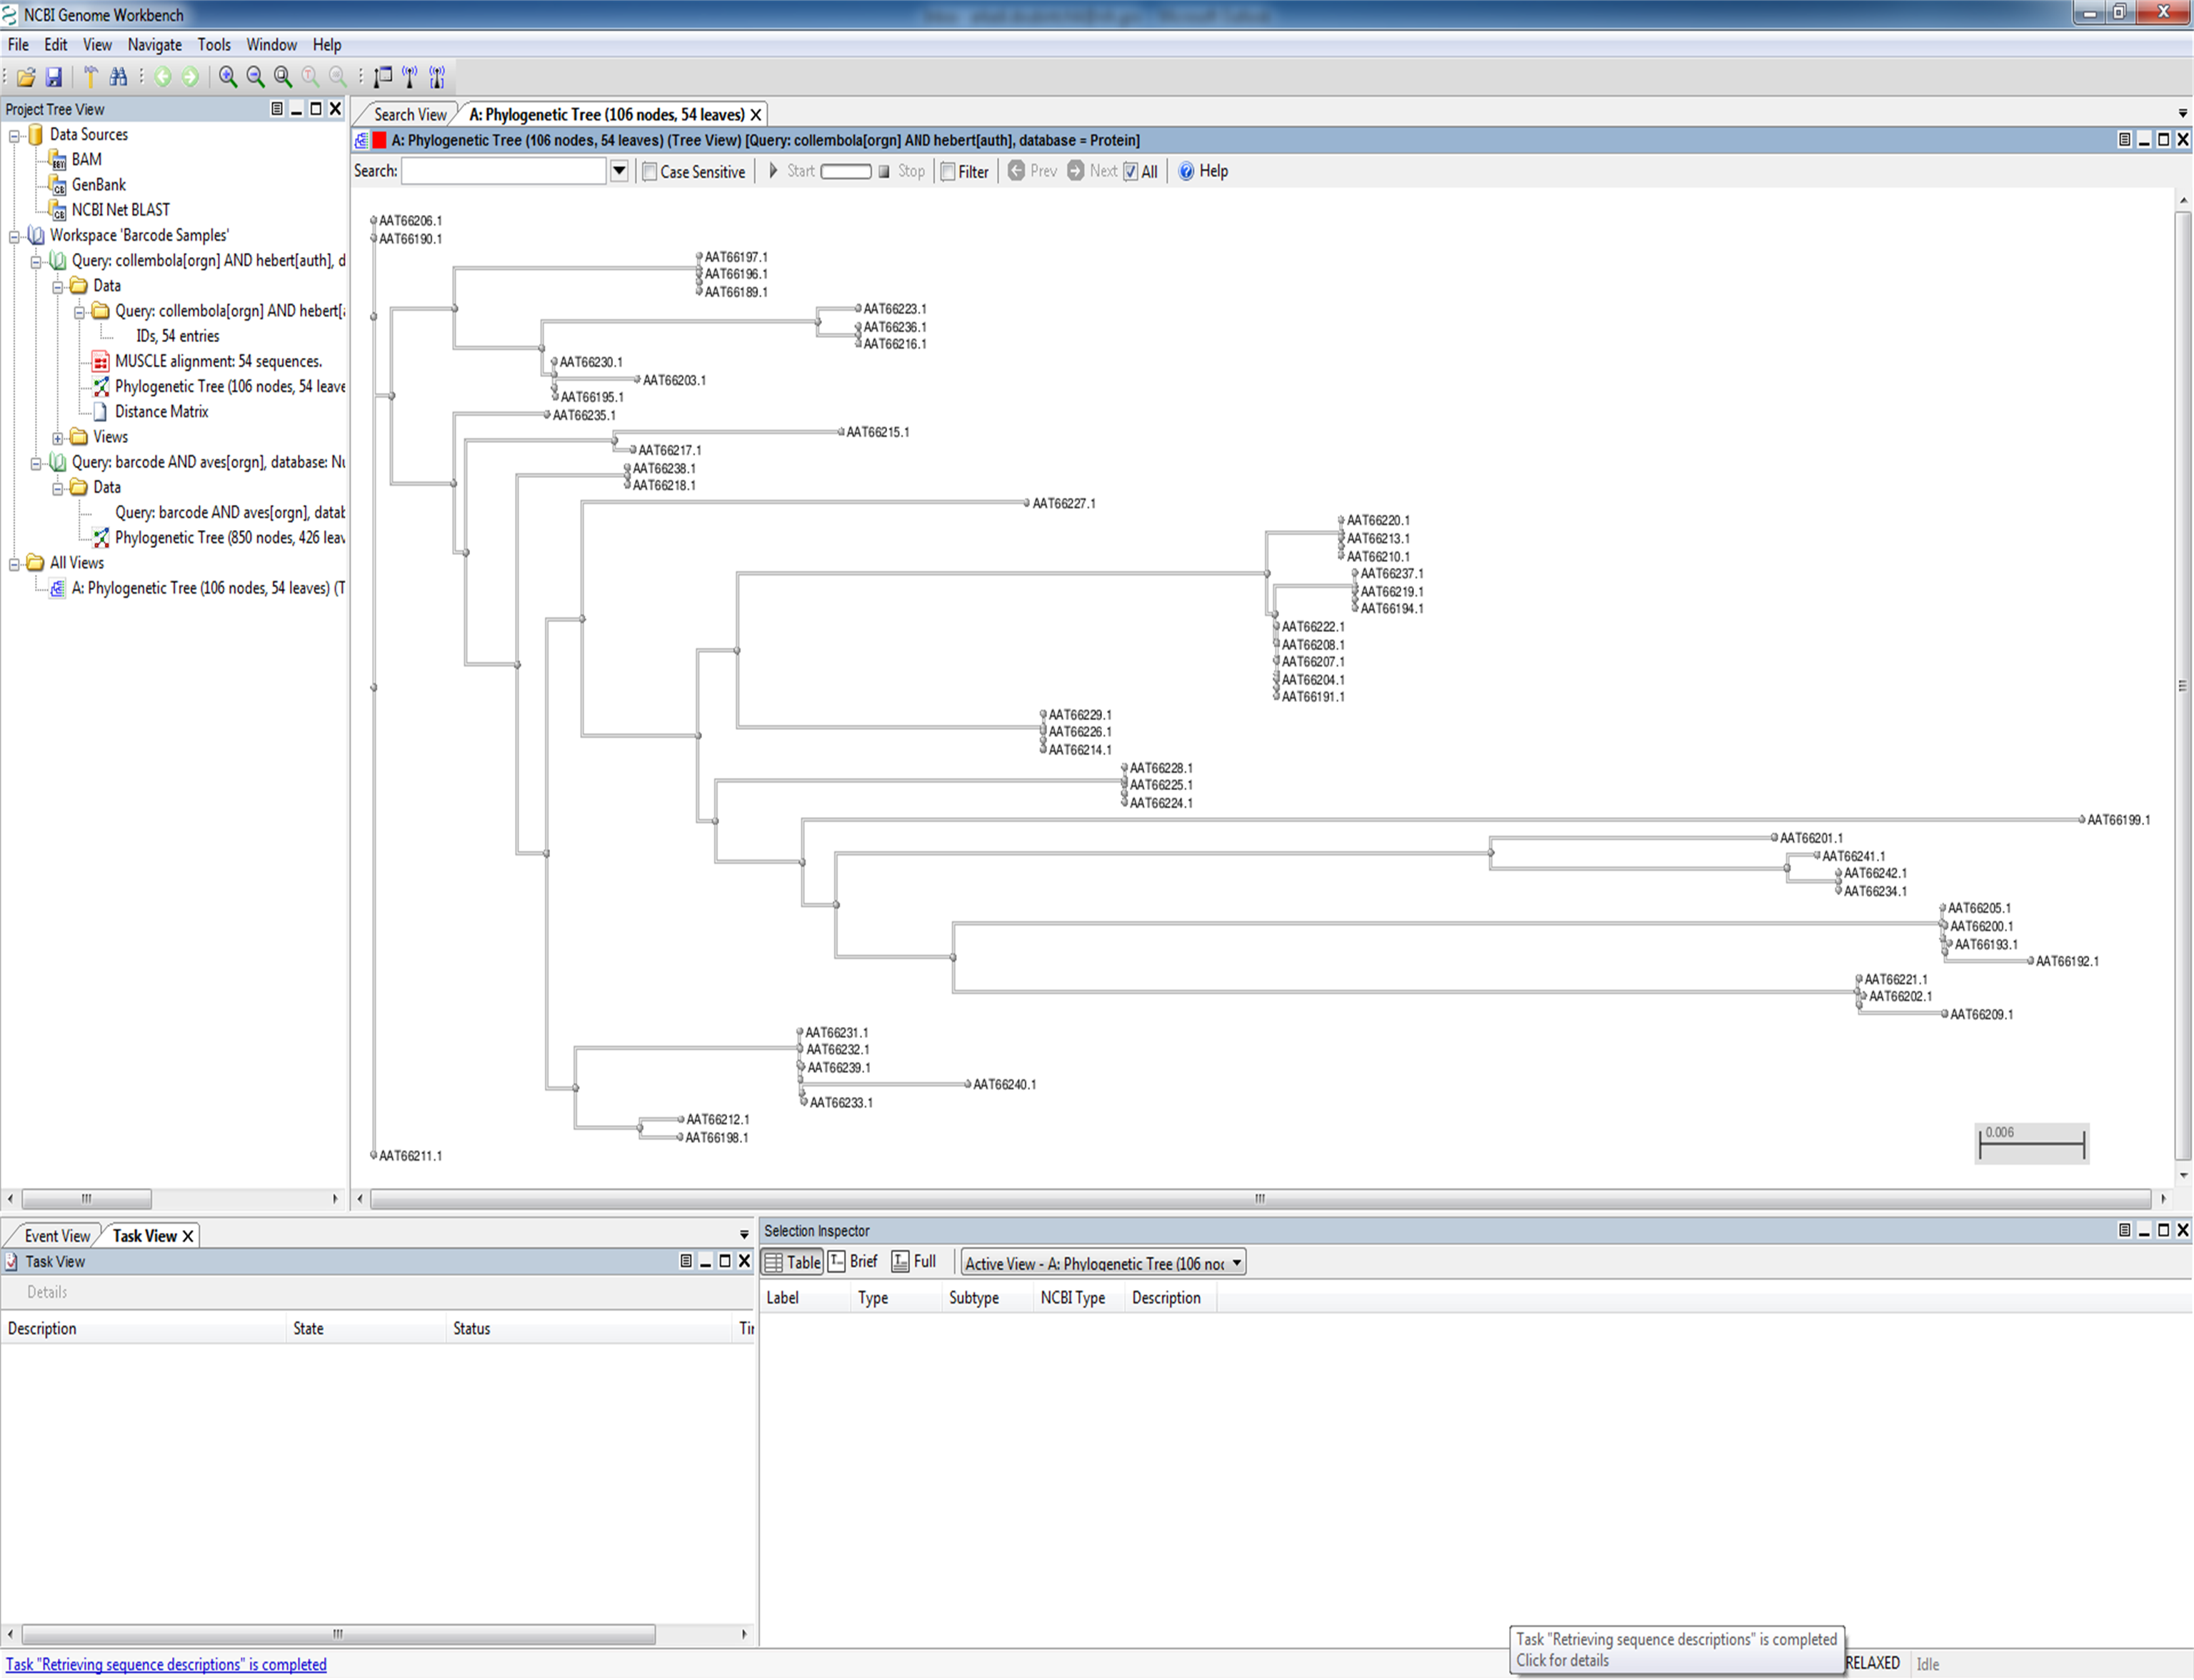 Open phylogenetic tree